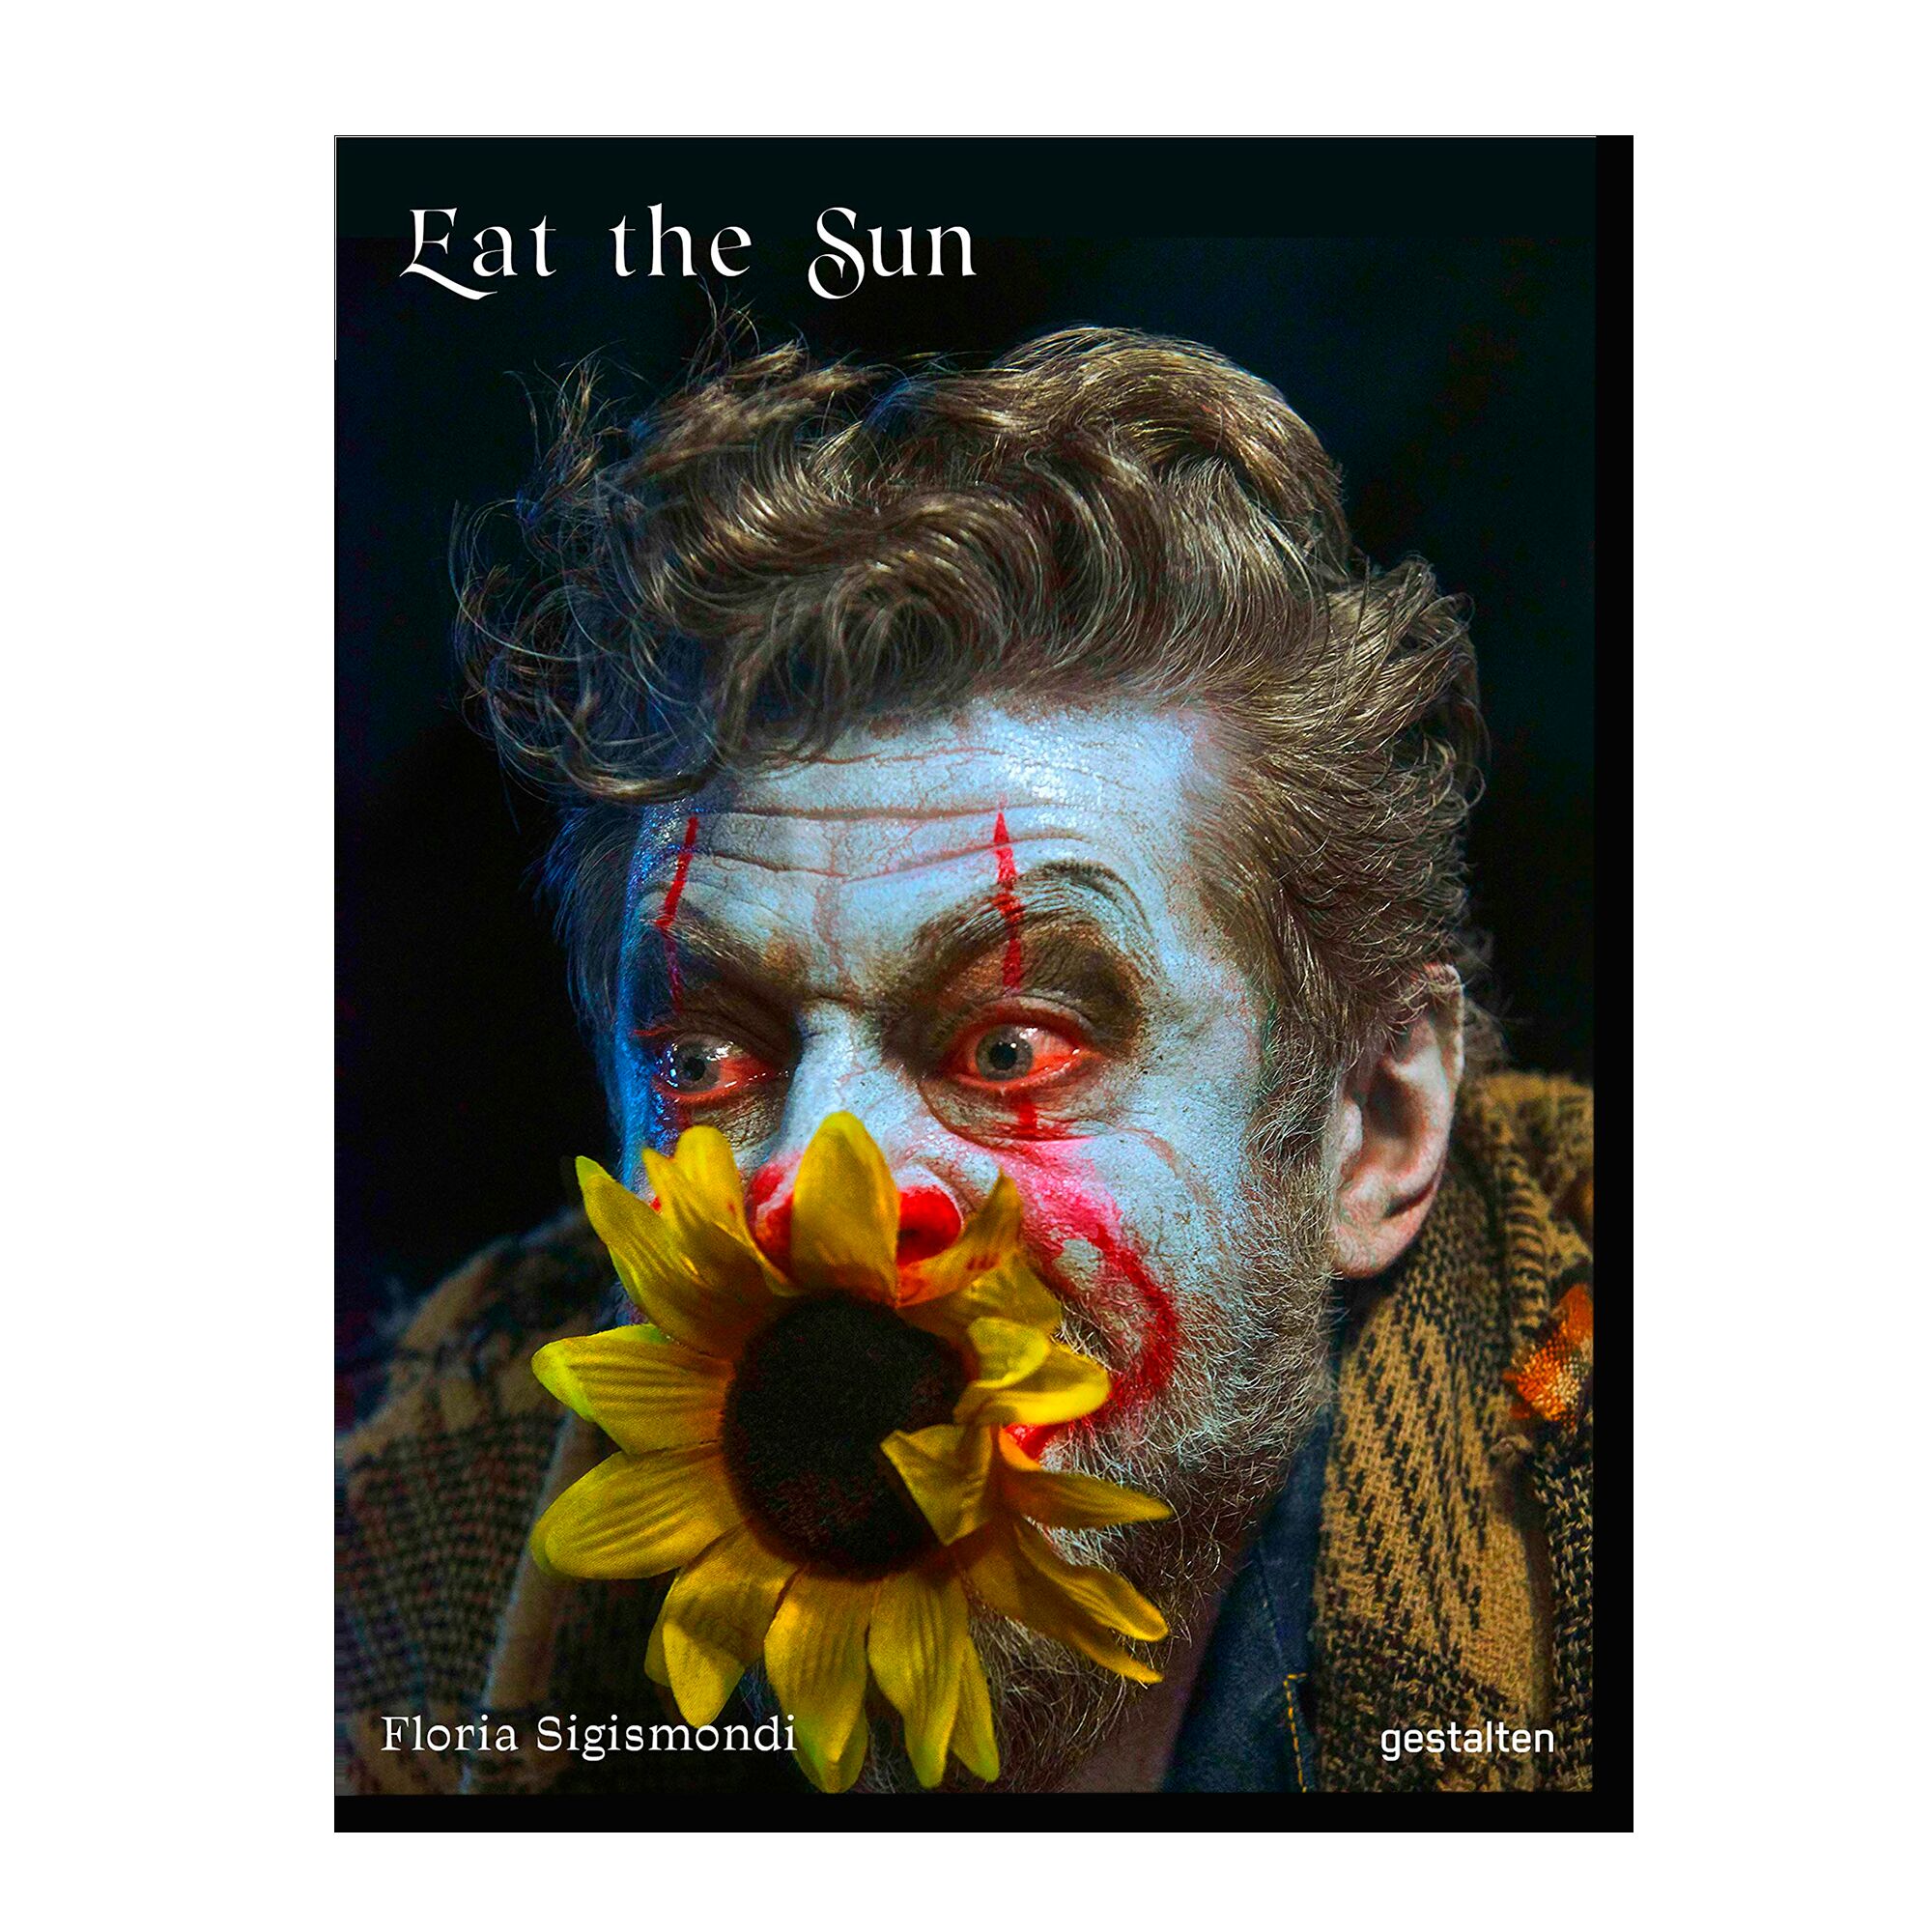 Eat the Sun: From Dusk to Dawn with Photographer Floria Sigismondi